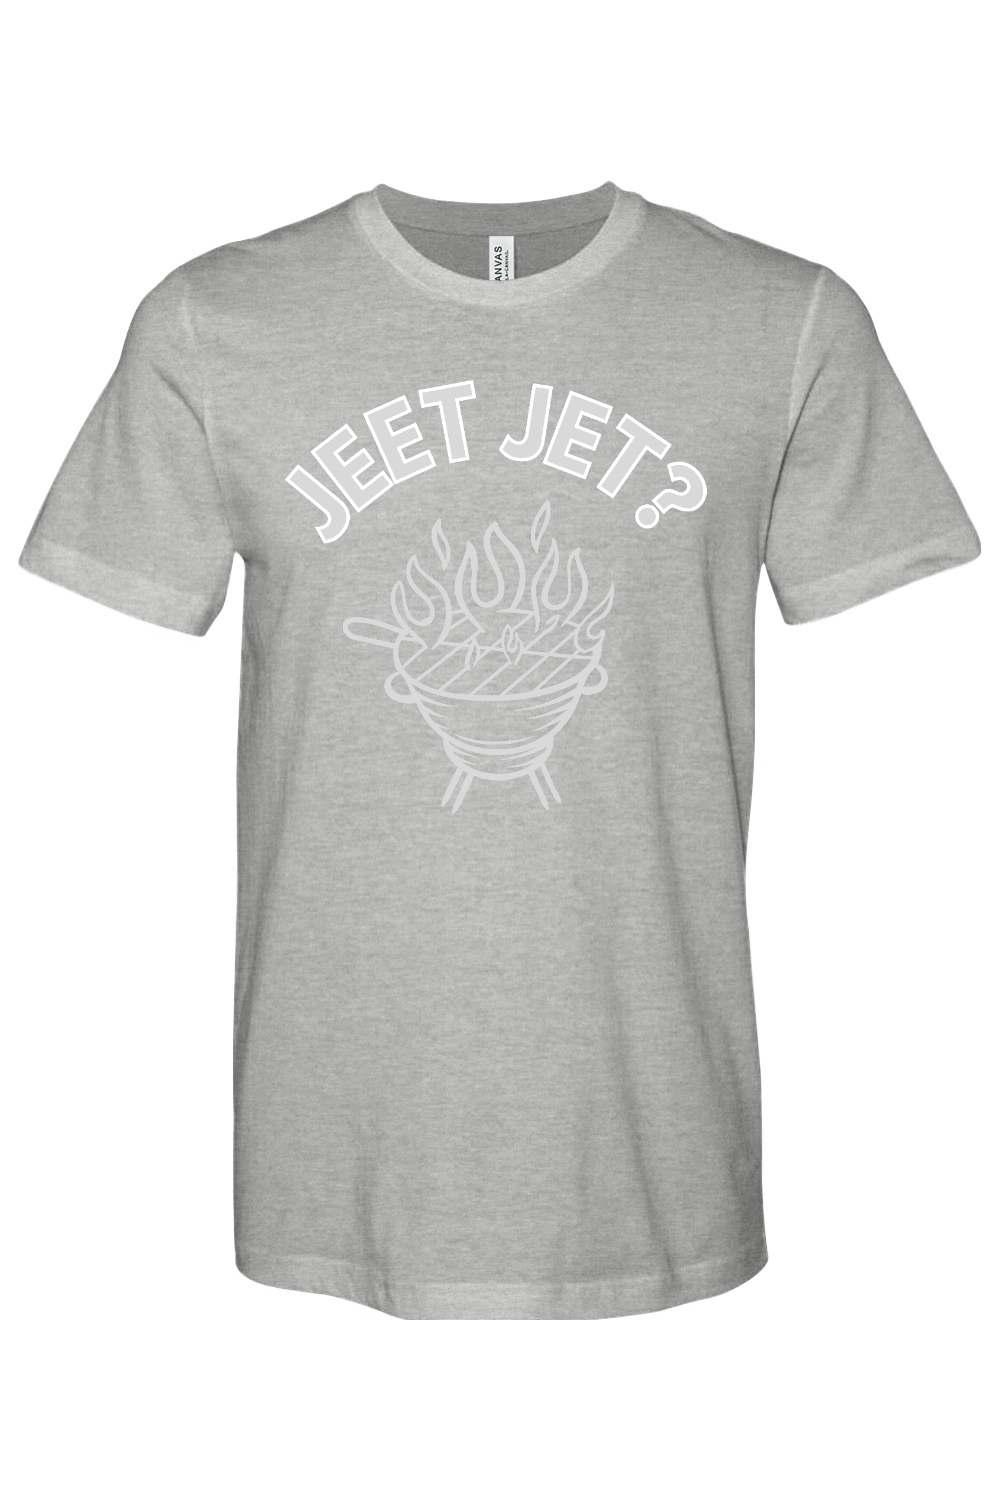 Jeet Jet?  - Bella + Canvas Heathered Jersey Tee - Yinzylvania